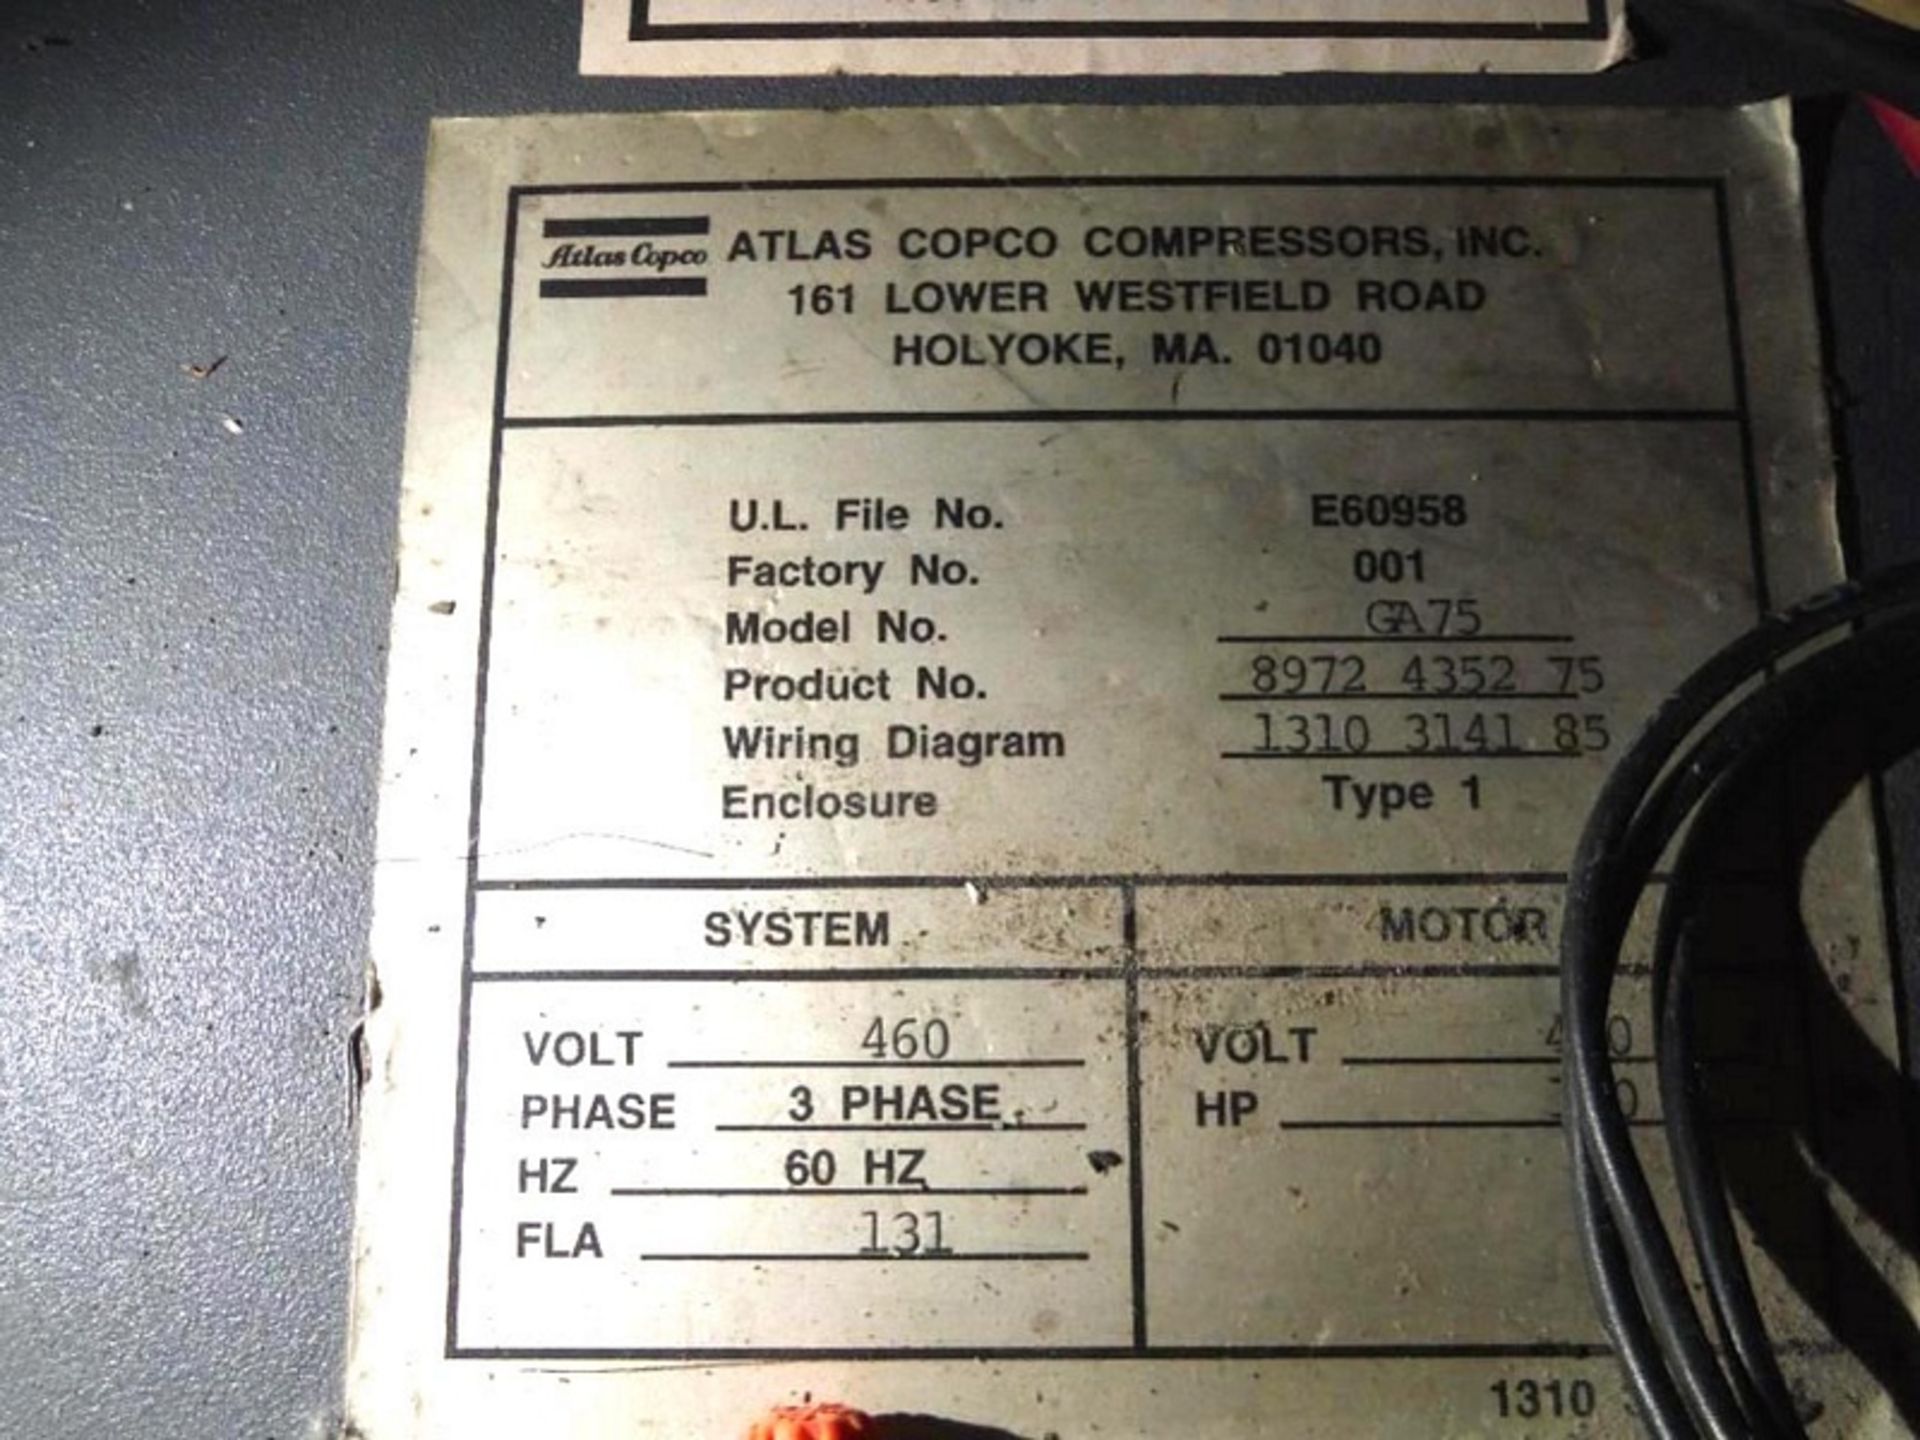 Atlas Copco GA75 Air Compressor Serial: 897243527575 Horsepower Compressor, Last used at a bakery - Image 5 of 6